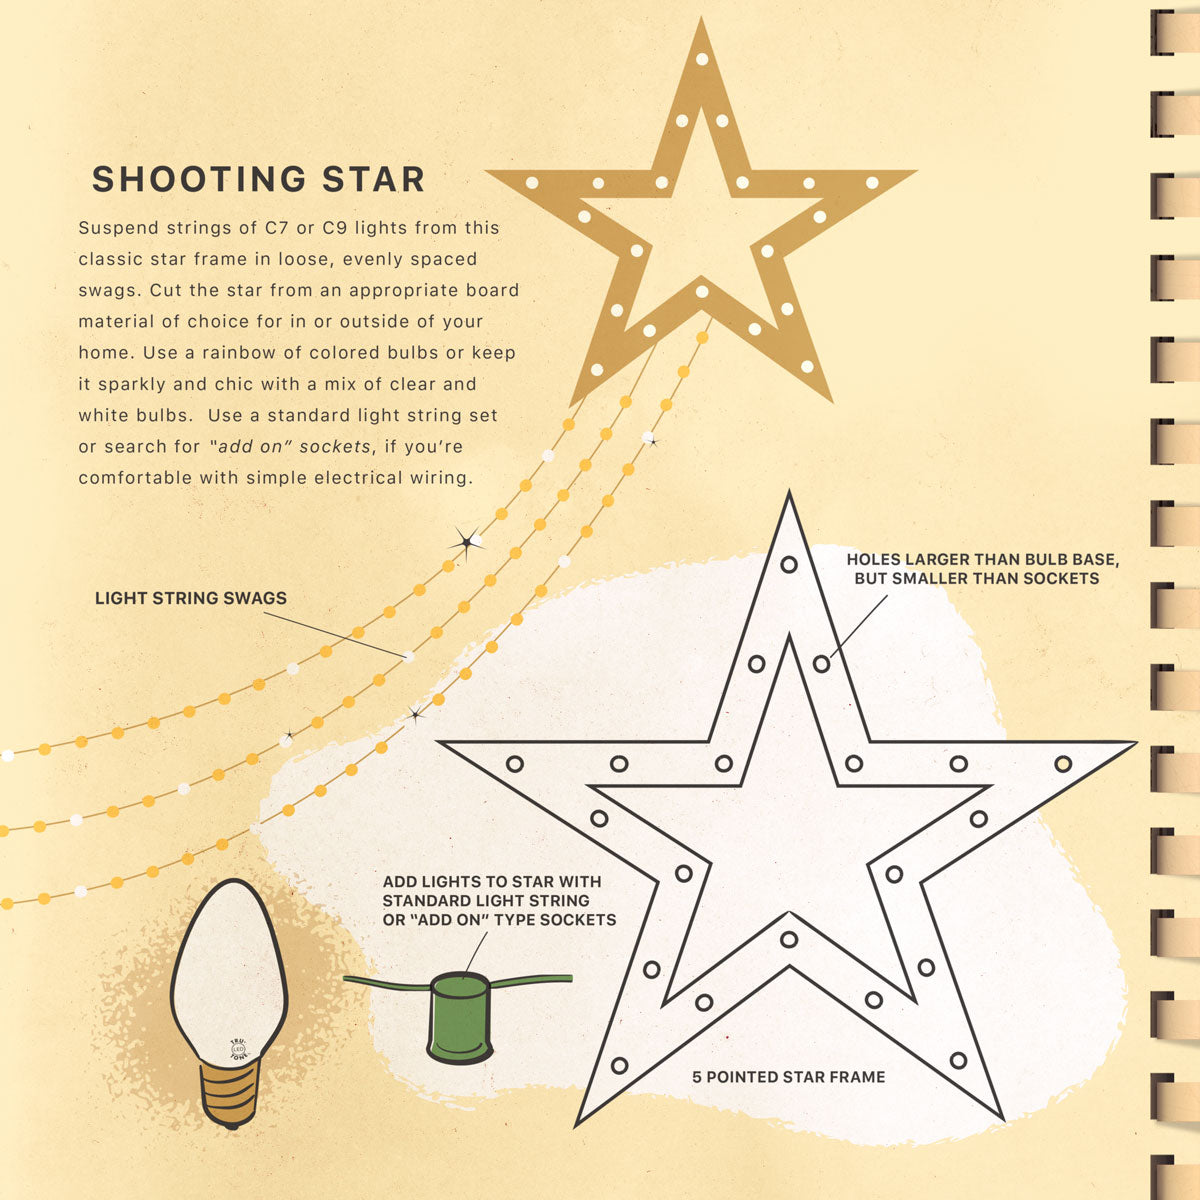 Retro DIY shooting star craft with Christmas lights instructions